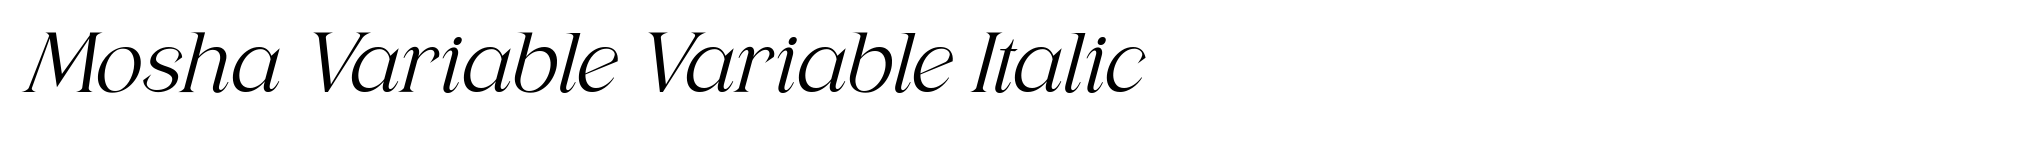 Mosha Variable Variable Italic image